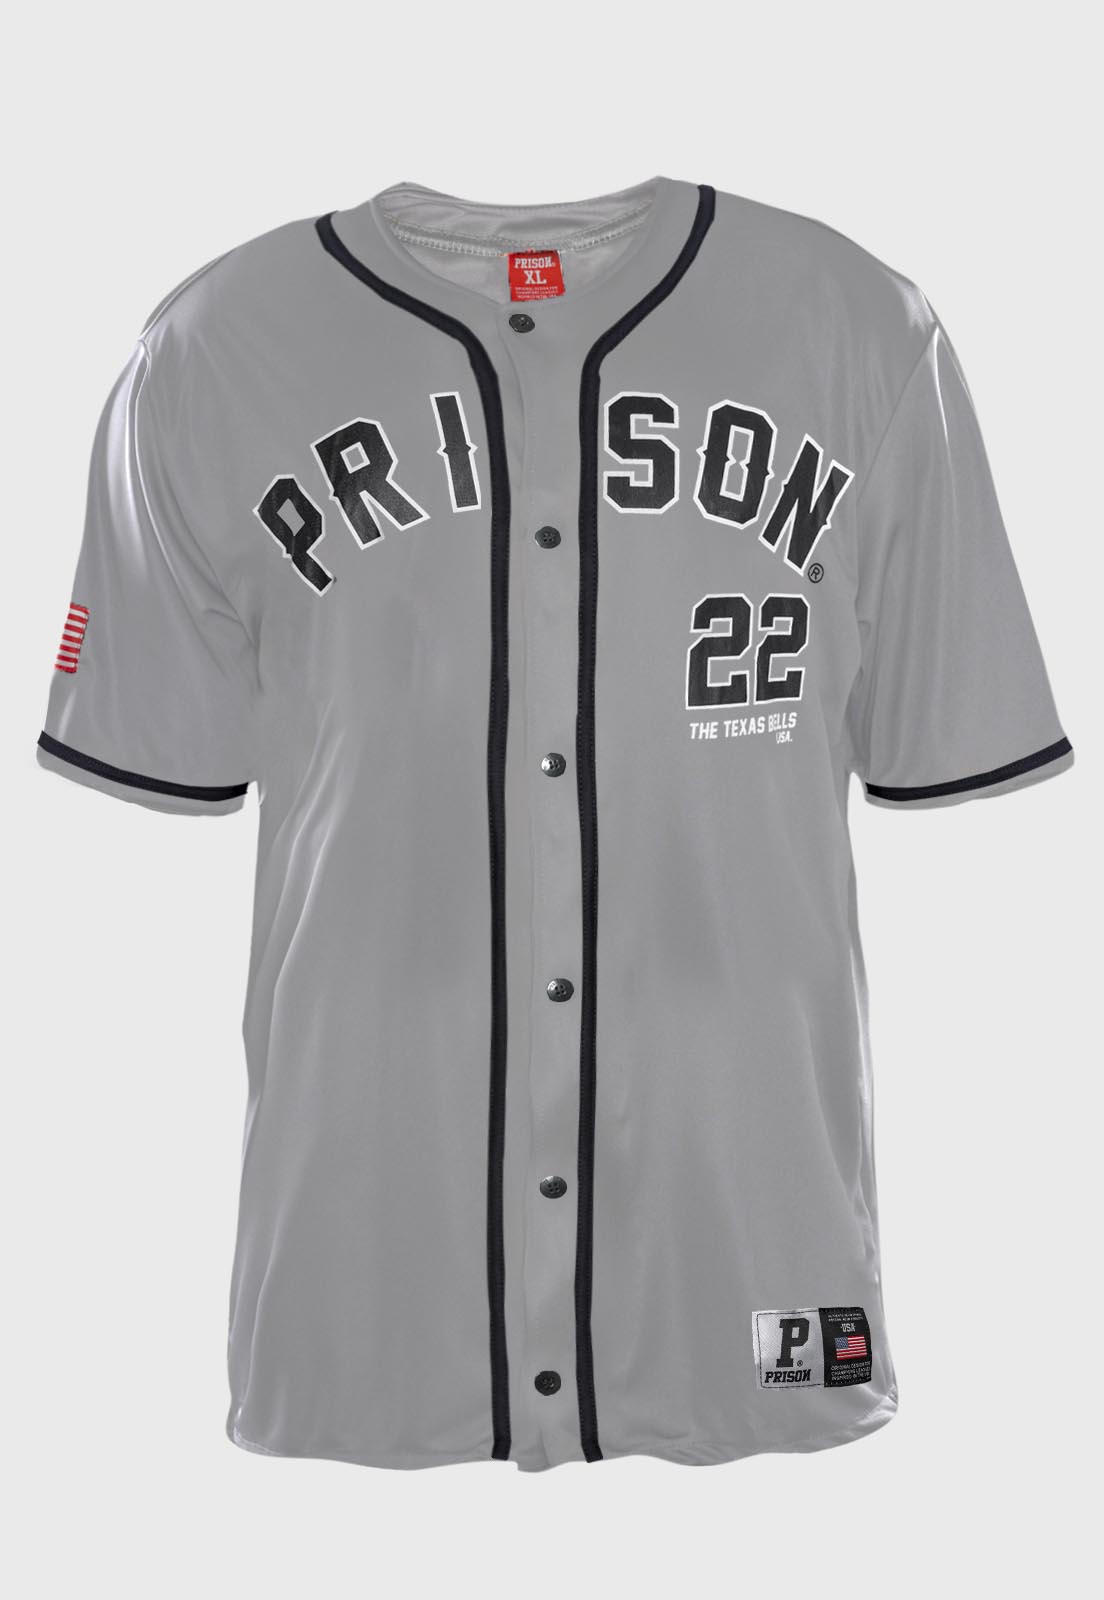 Camisa de Baseball Prison New League yorks 22